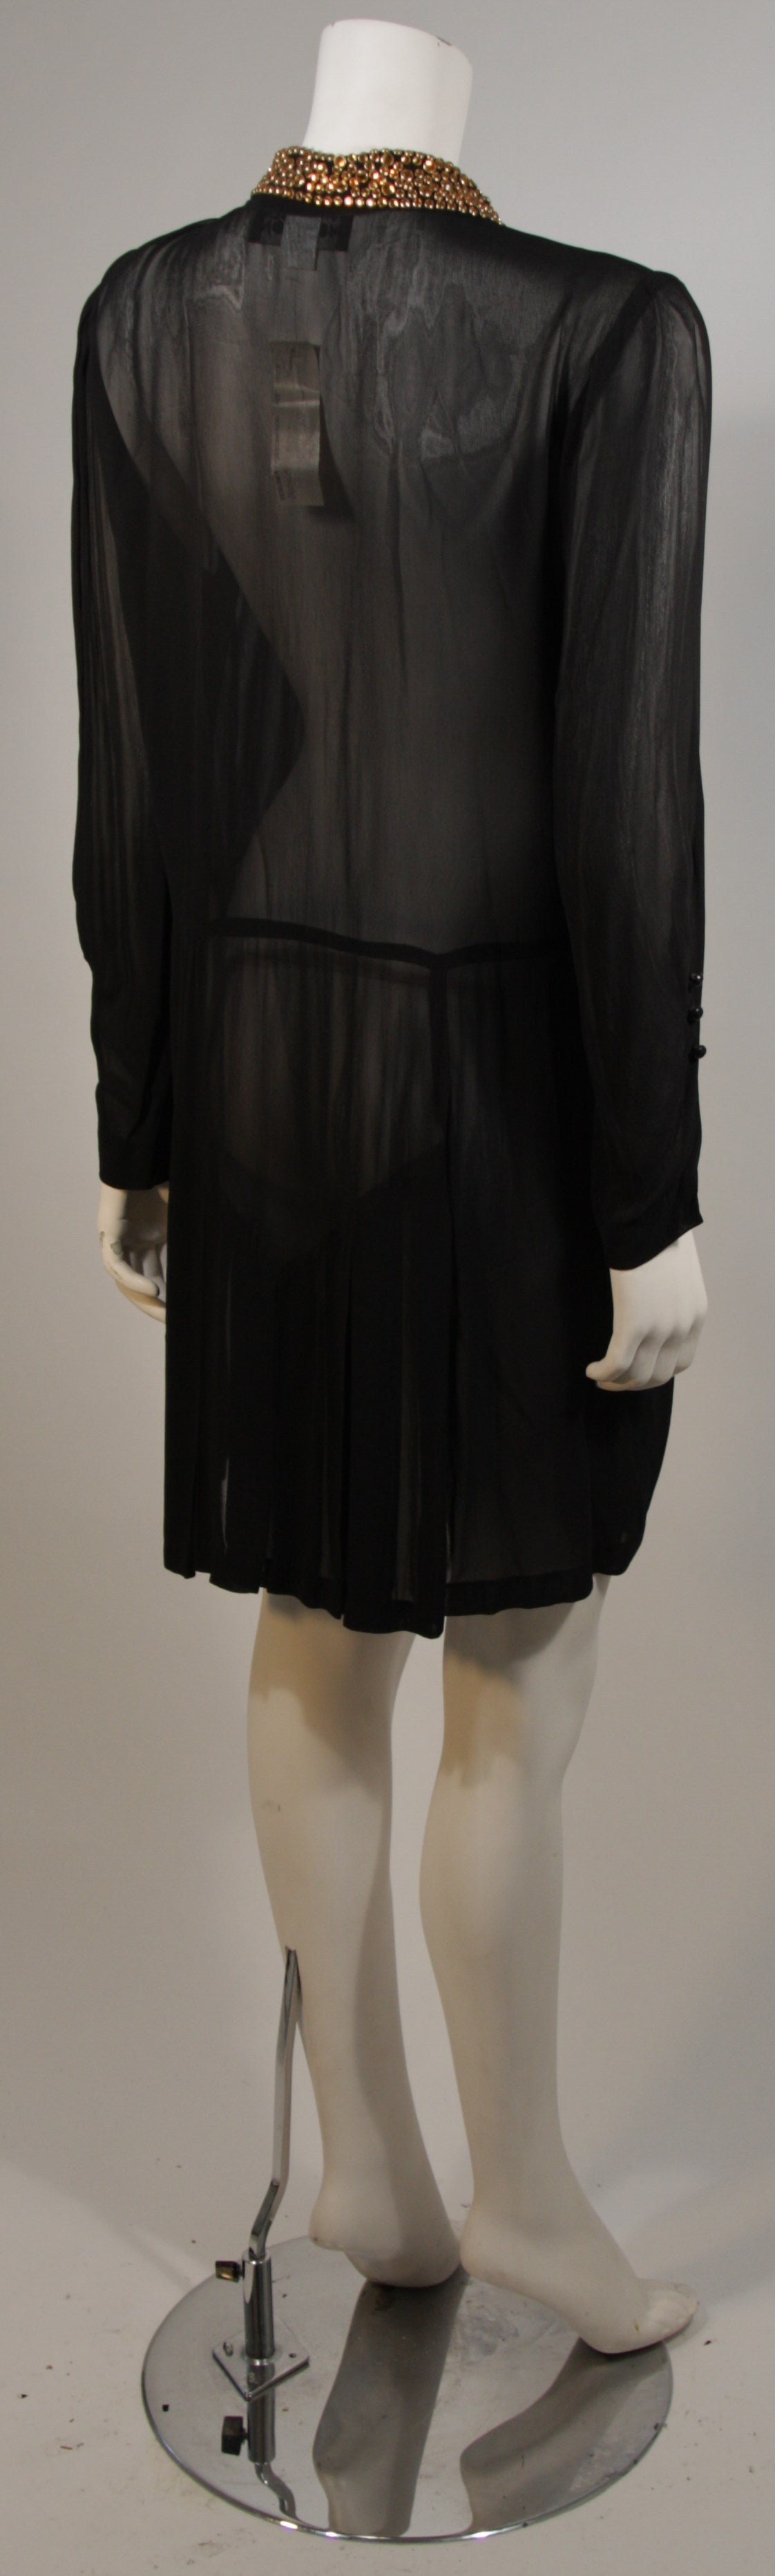 Michael Morrison Sheer Black Shirt Dress with Heavily Embellished Collar 2